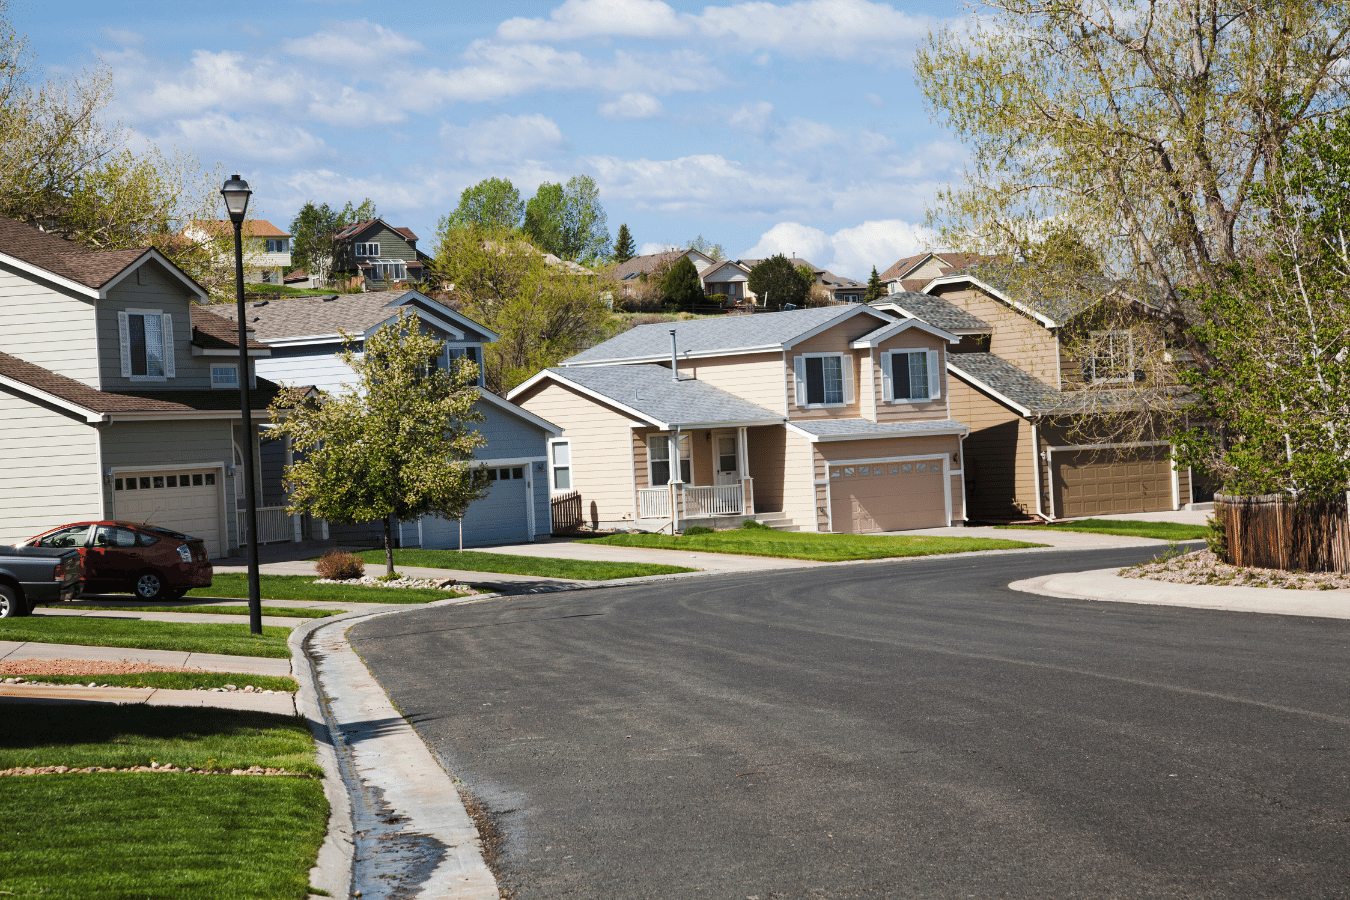 Houses in Thornton Colorado